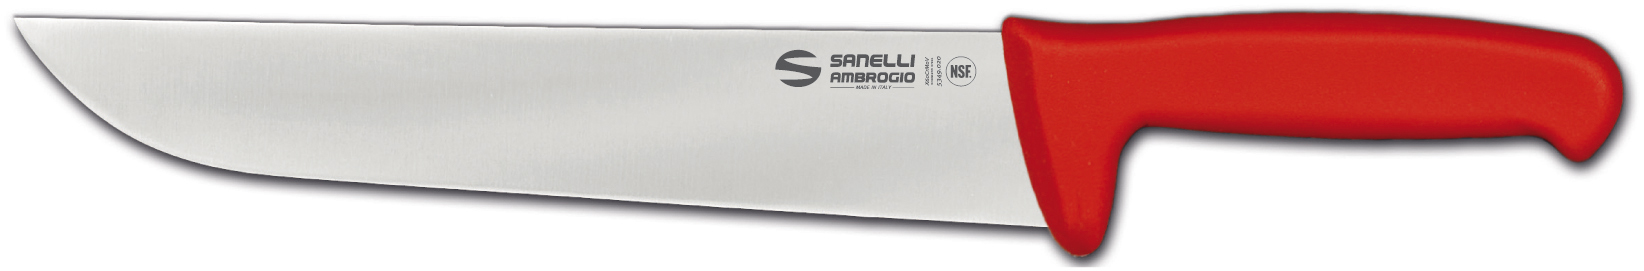 S309.026R SUPRA BUTCHER KNIFE RED HANDLE 26CM LAMA SANELLI AMBROGIO